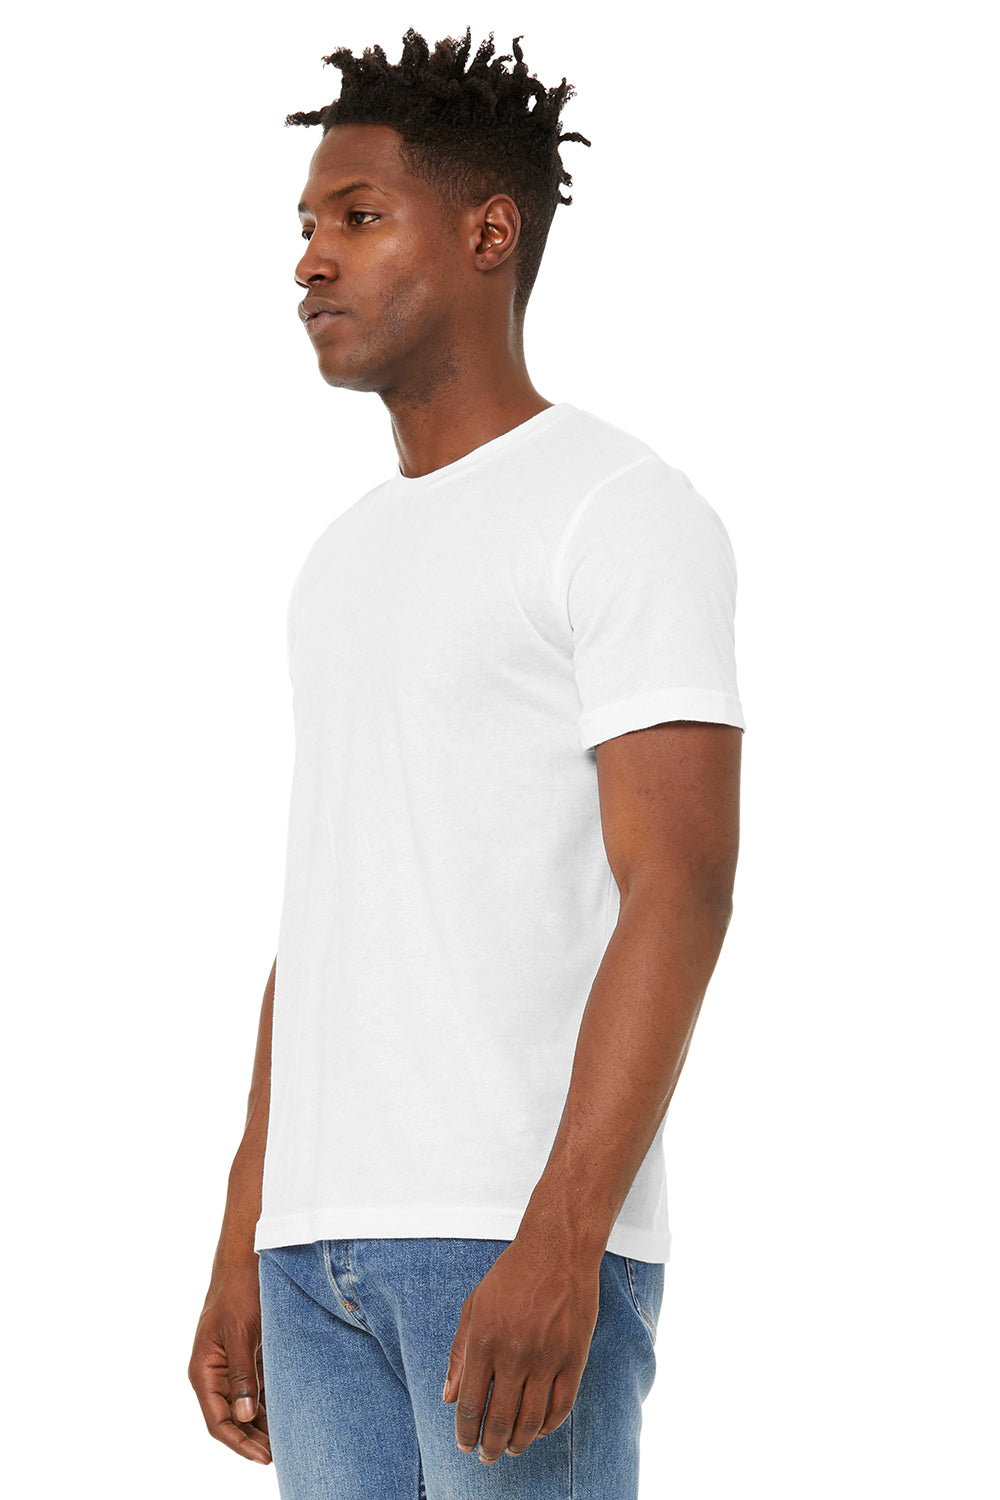 Bella + Canvas BC3301/3301C/3301 Mens Jersey Short Sleeve Crewneck T-Shirt Solid White Model 3Q